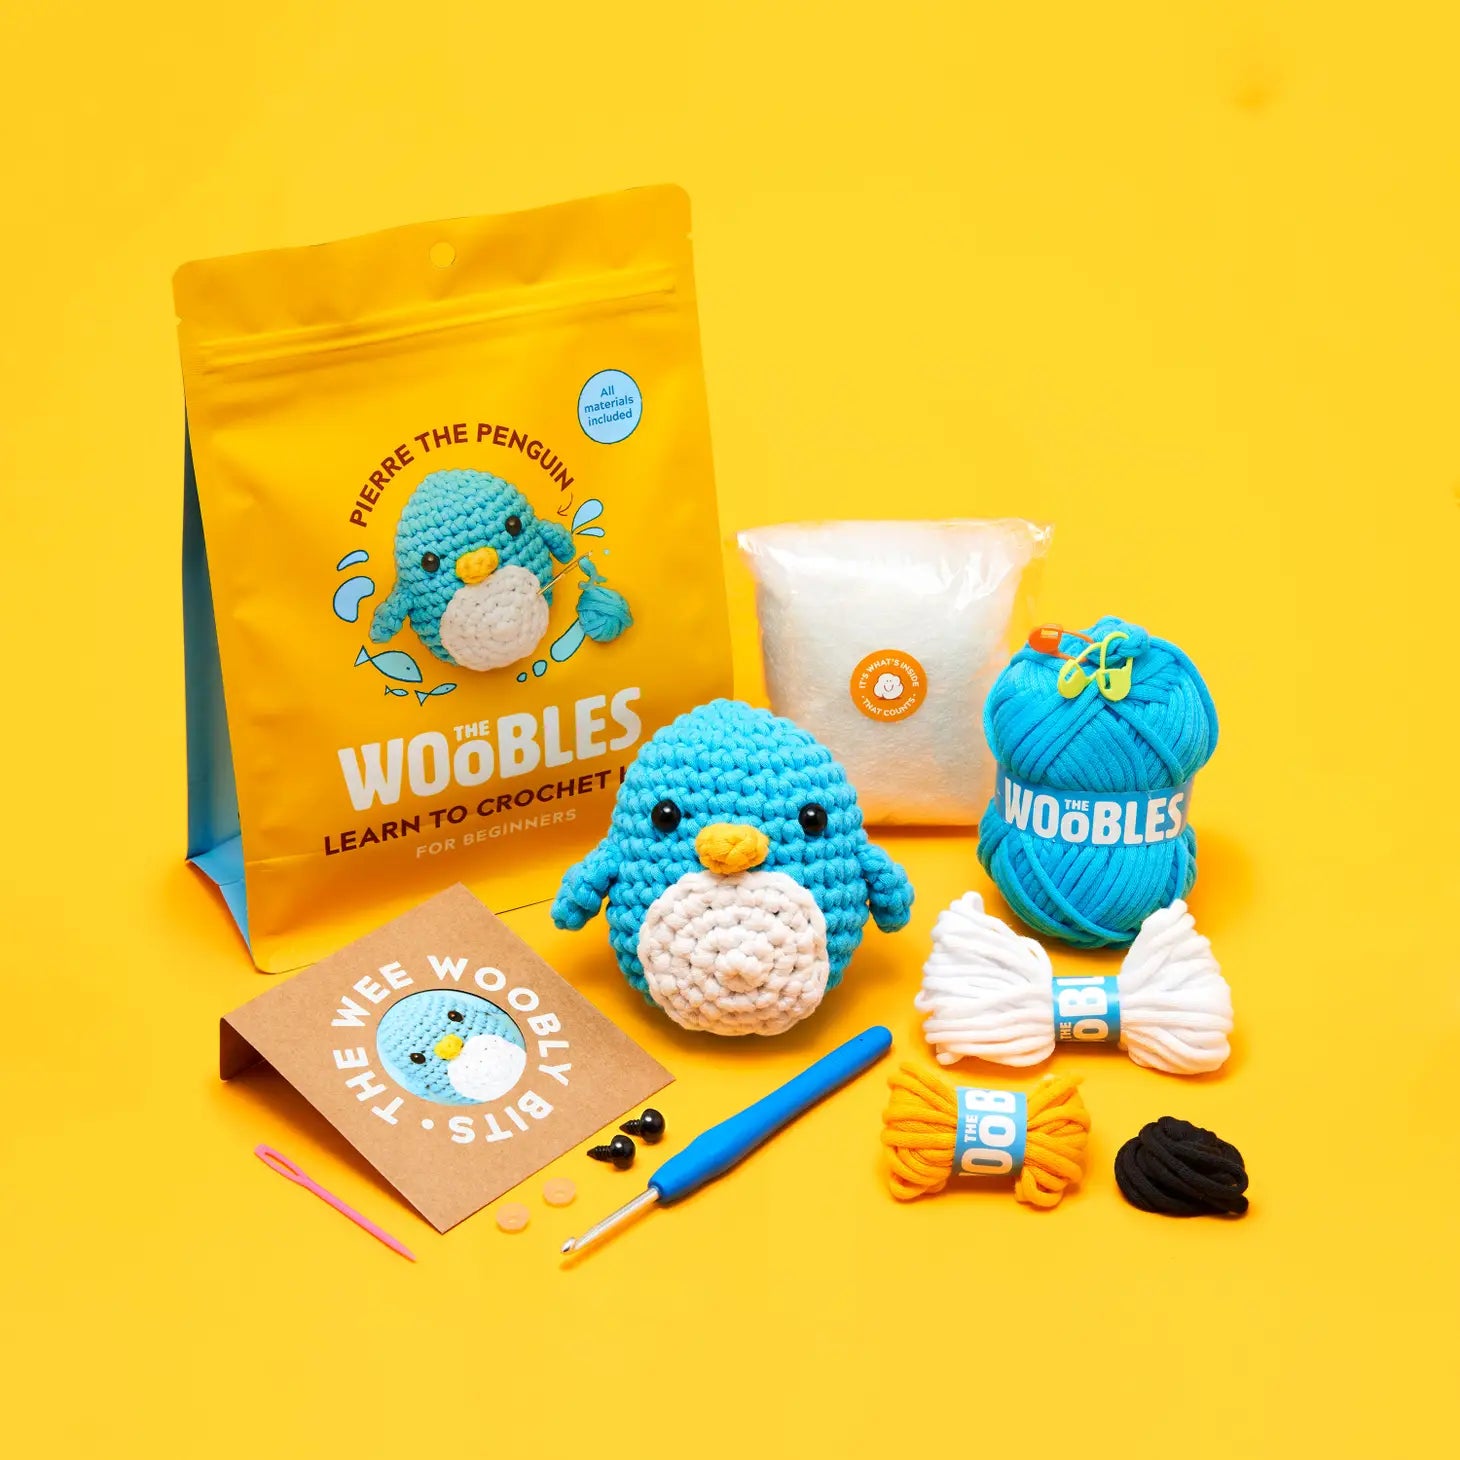 The Woobles Beginner Crochet Kits